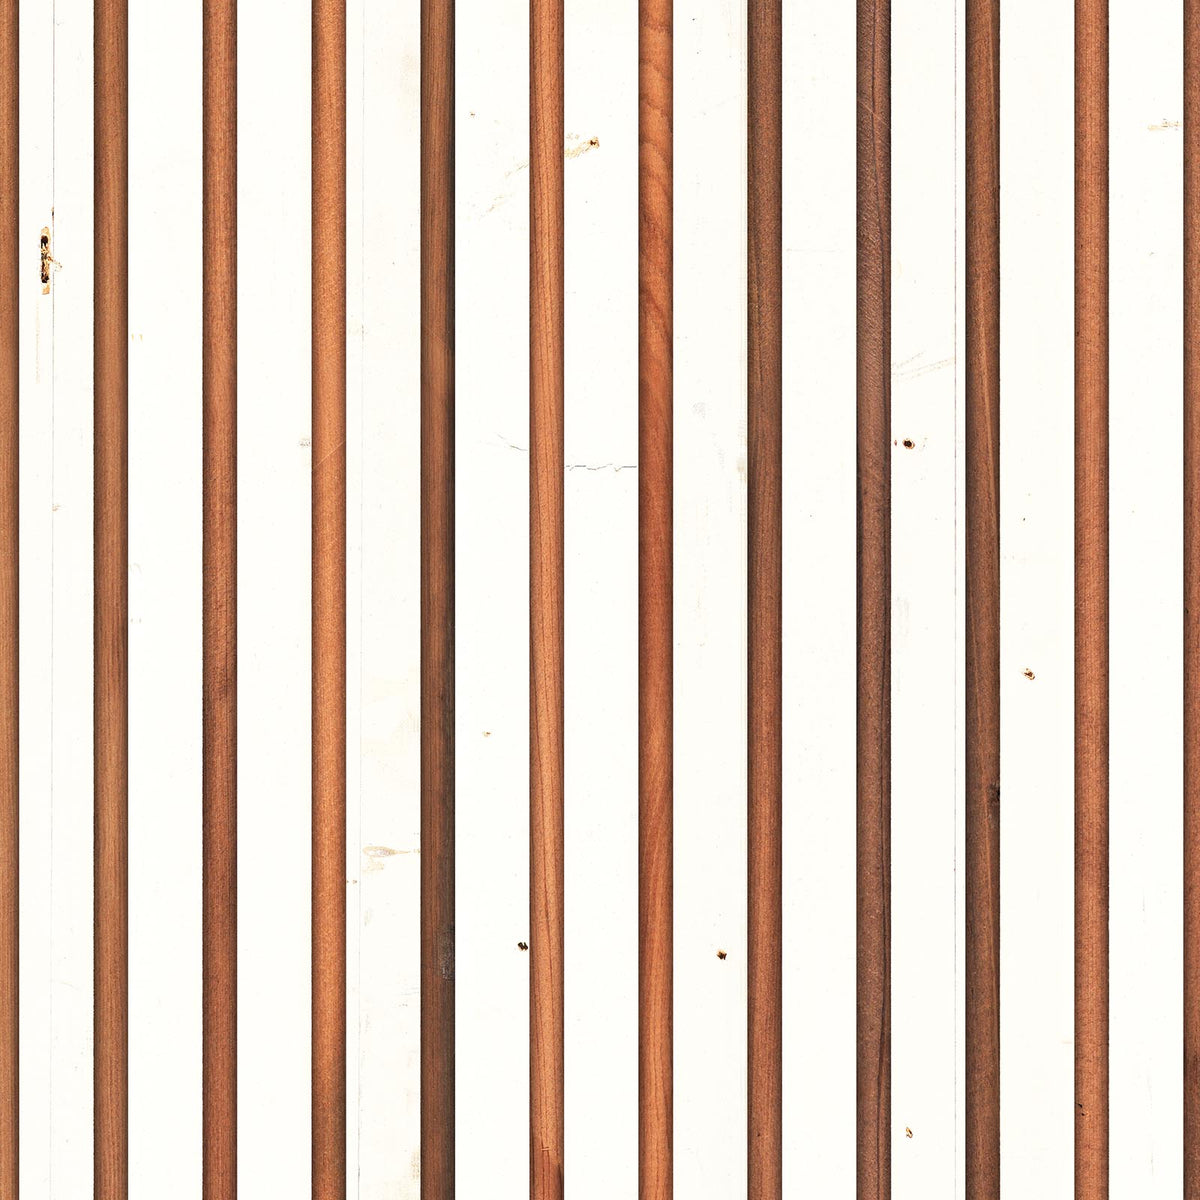 TIM-03 White on teak Timber Strips wallpaper by Piet Hein Eek for NLXL